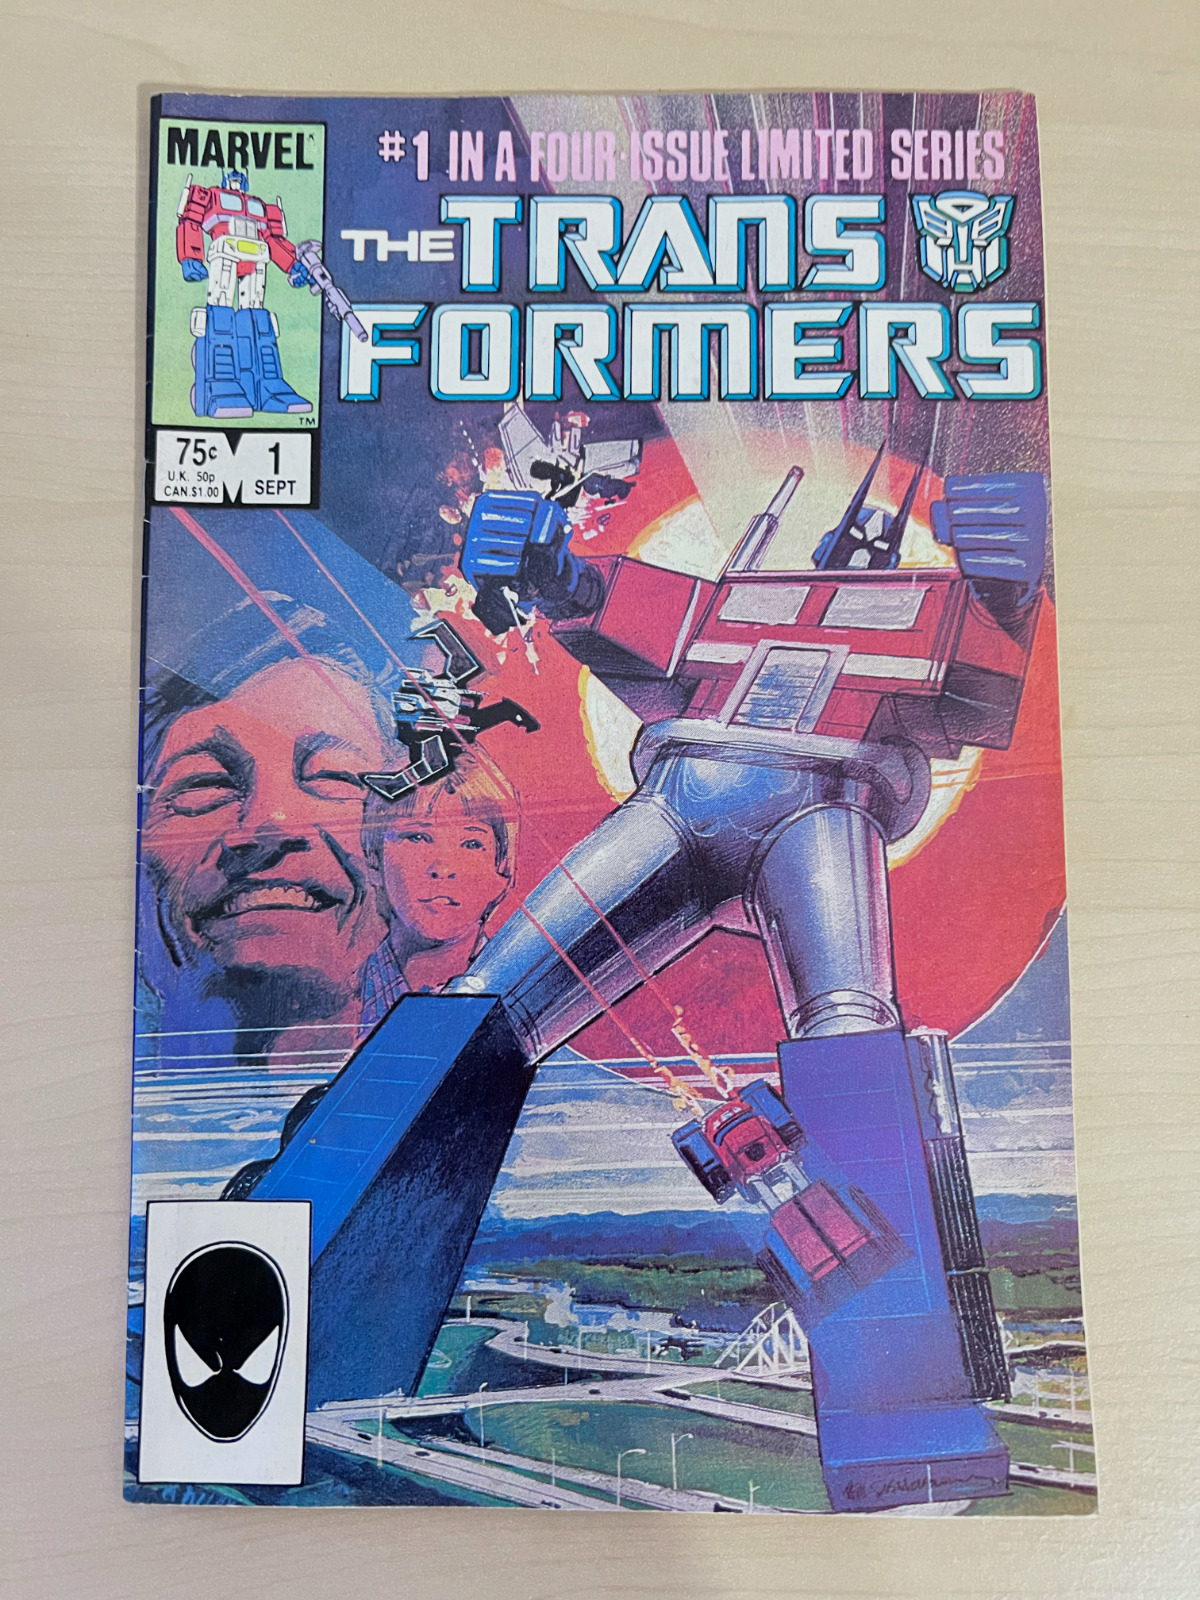 Vintage MARVEL Comic Book THE TRANSFORMERS #1 Sept 1984